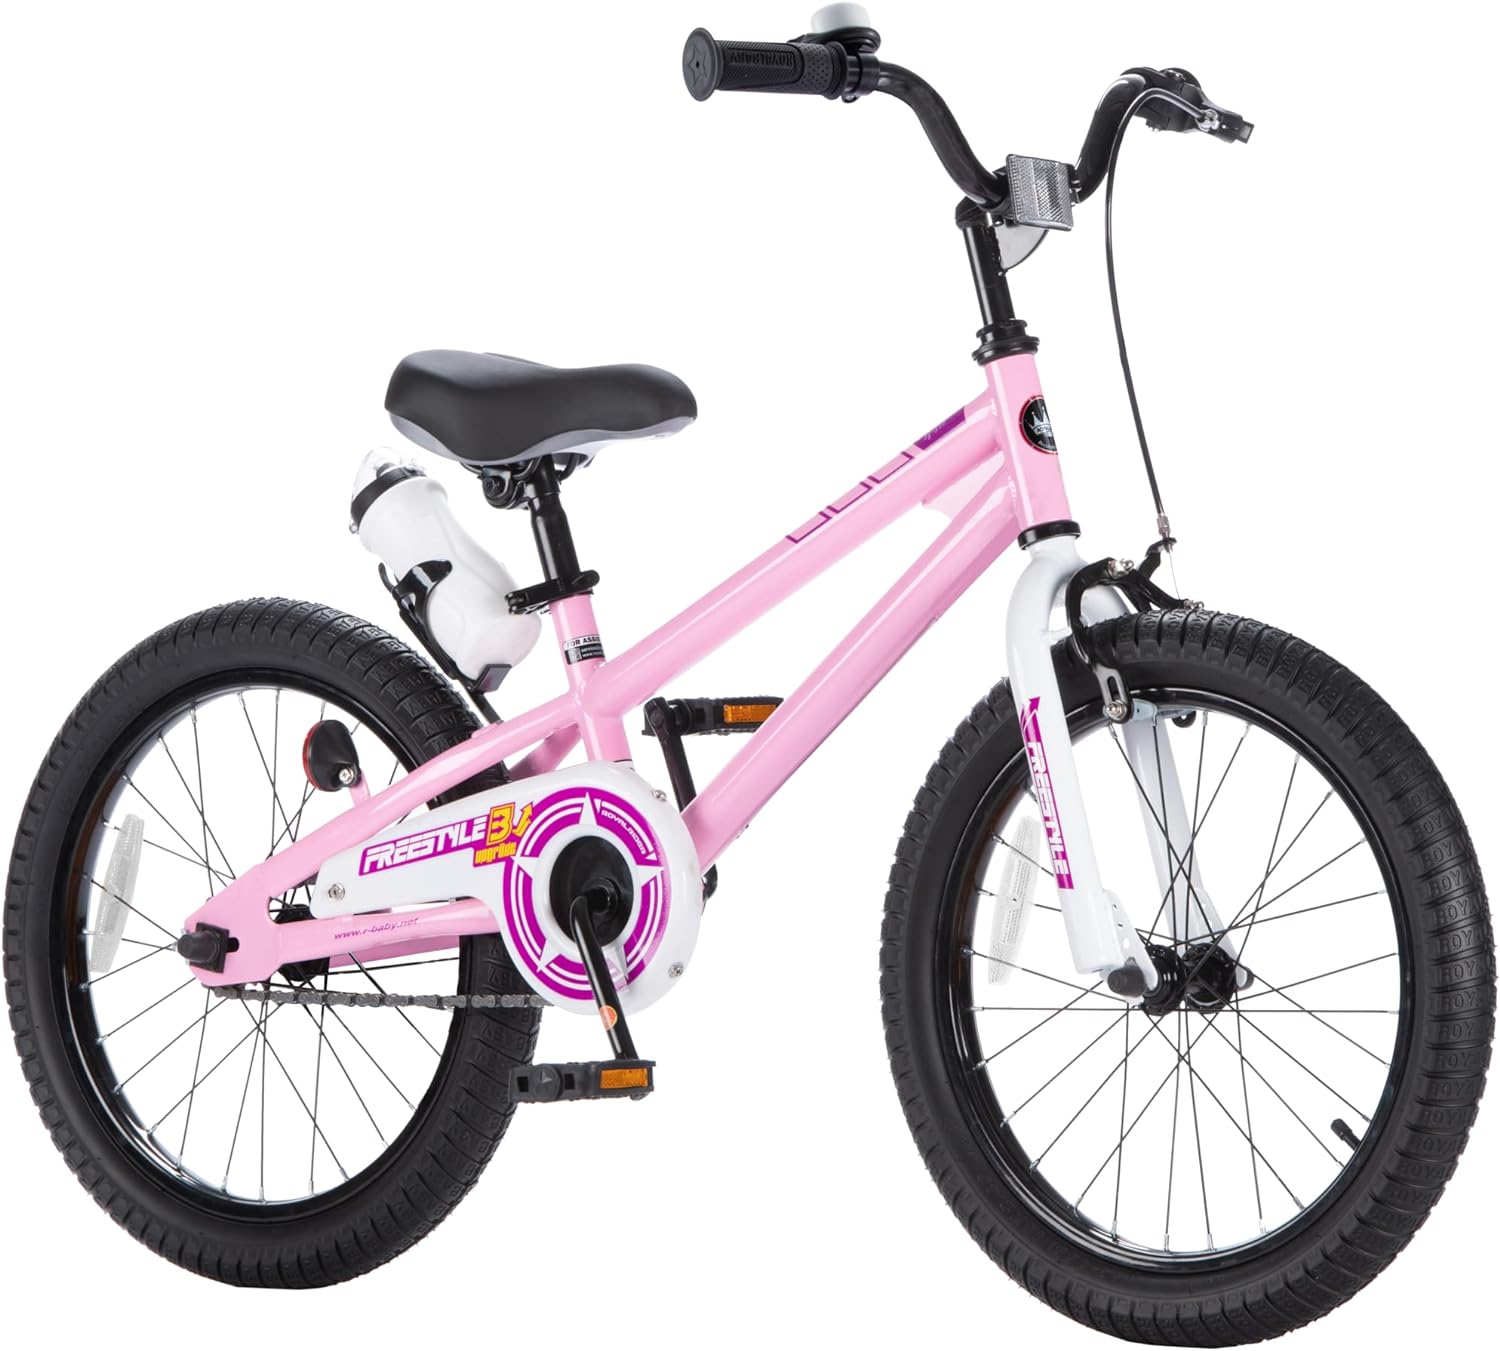 $89: Royalbaby Freestyle Kids Bike, 18 Inch, Pink